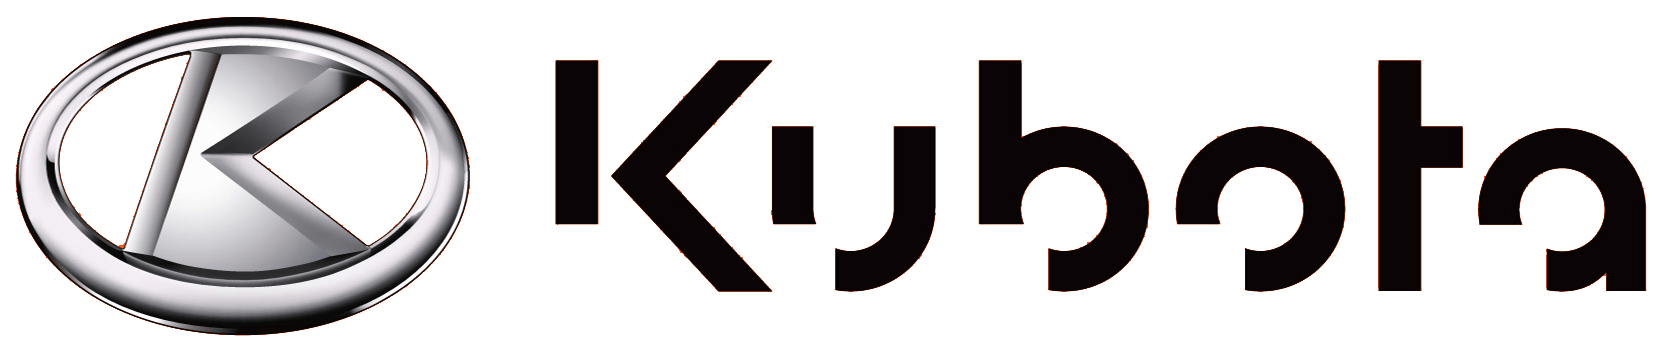 Kubota Logo - Cooper Implement